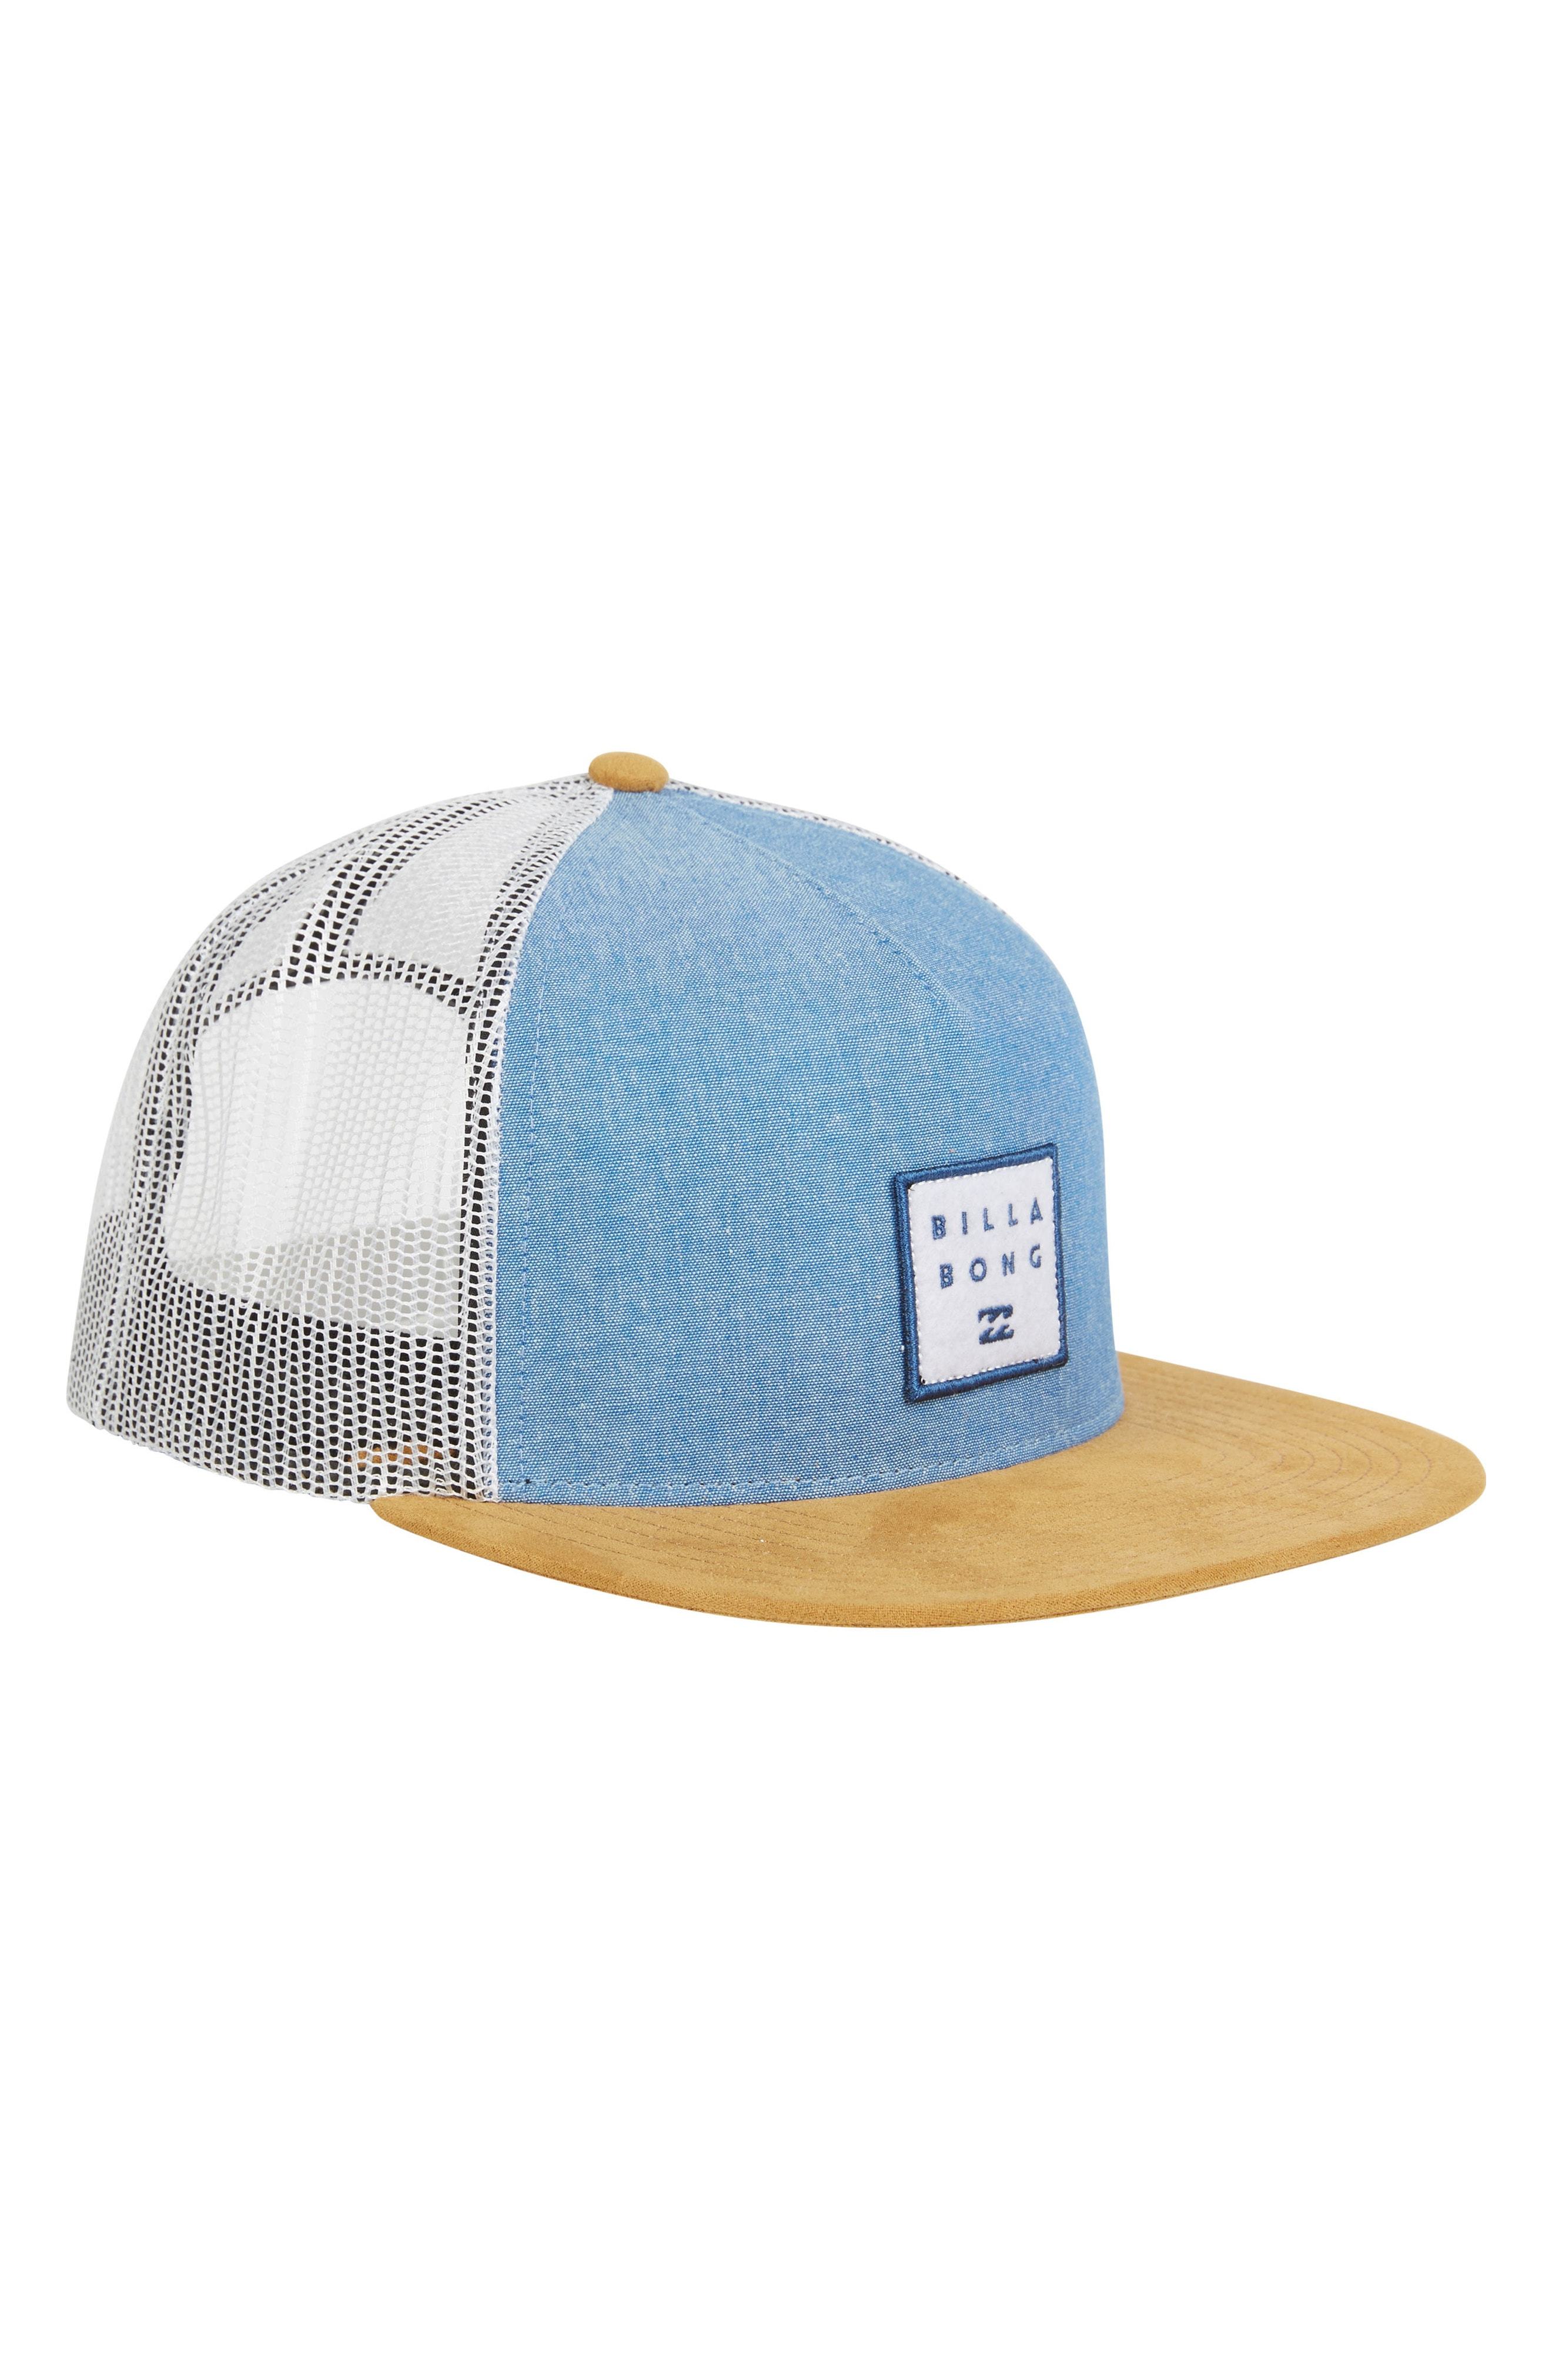 Billabong Stacked Trucker Hat, $14 | Lookastic | Nordstrom